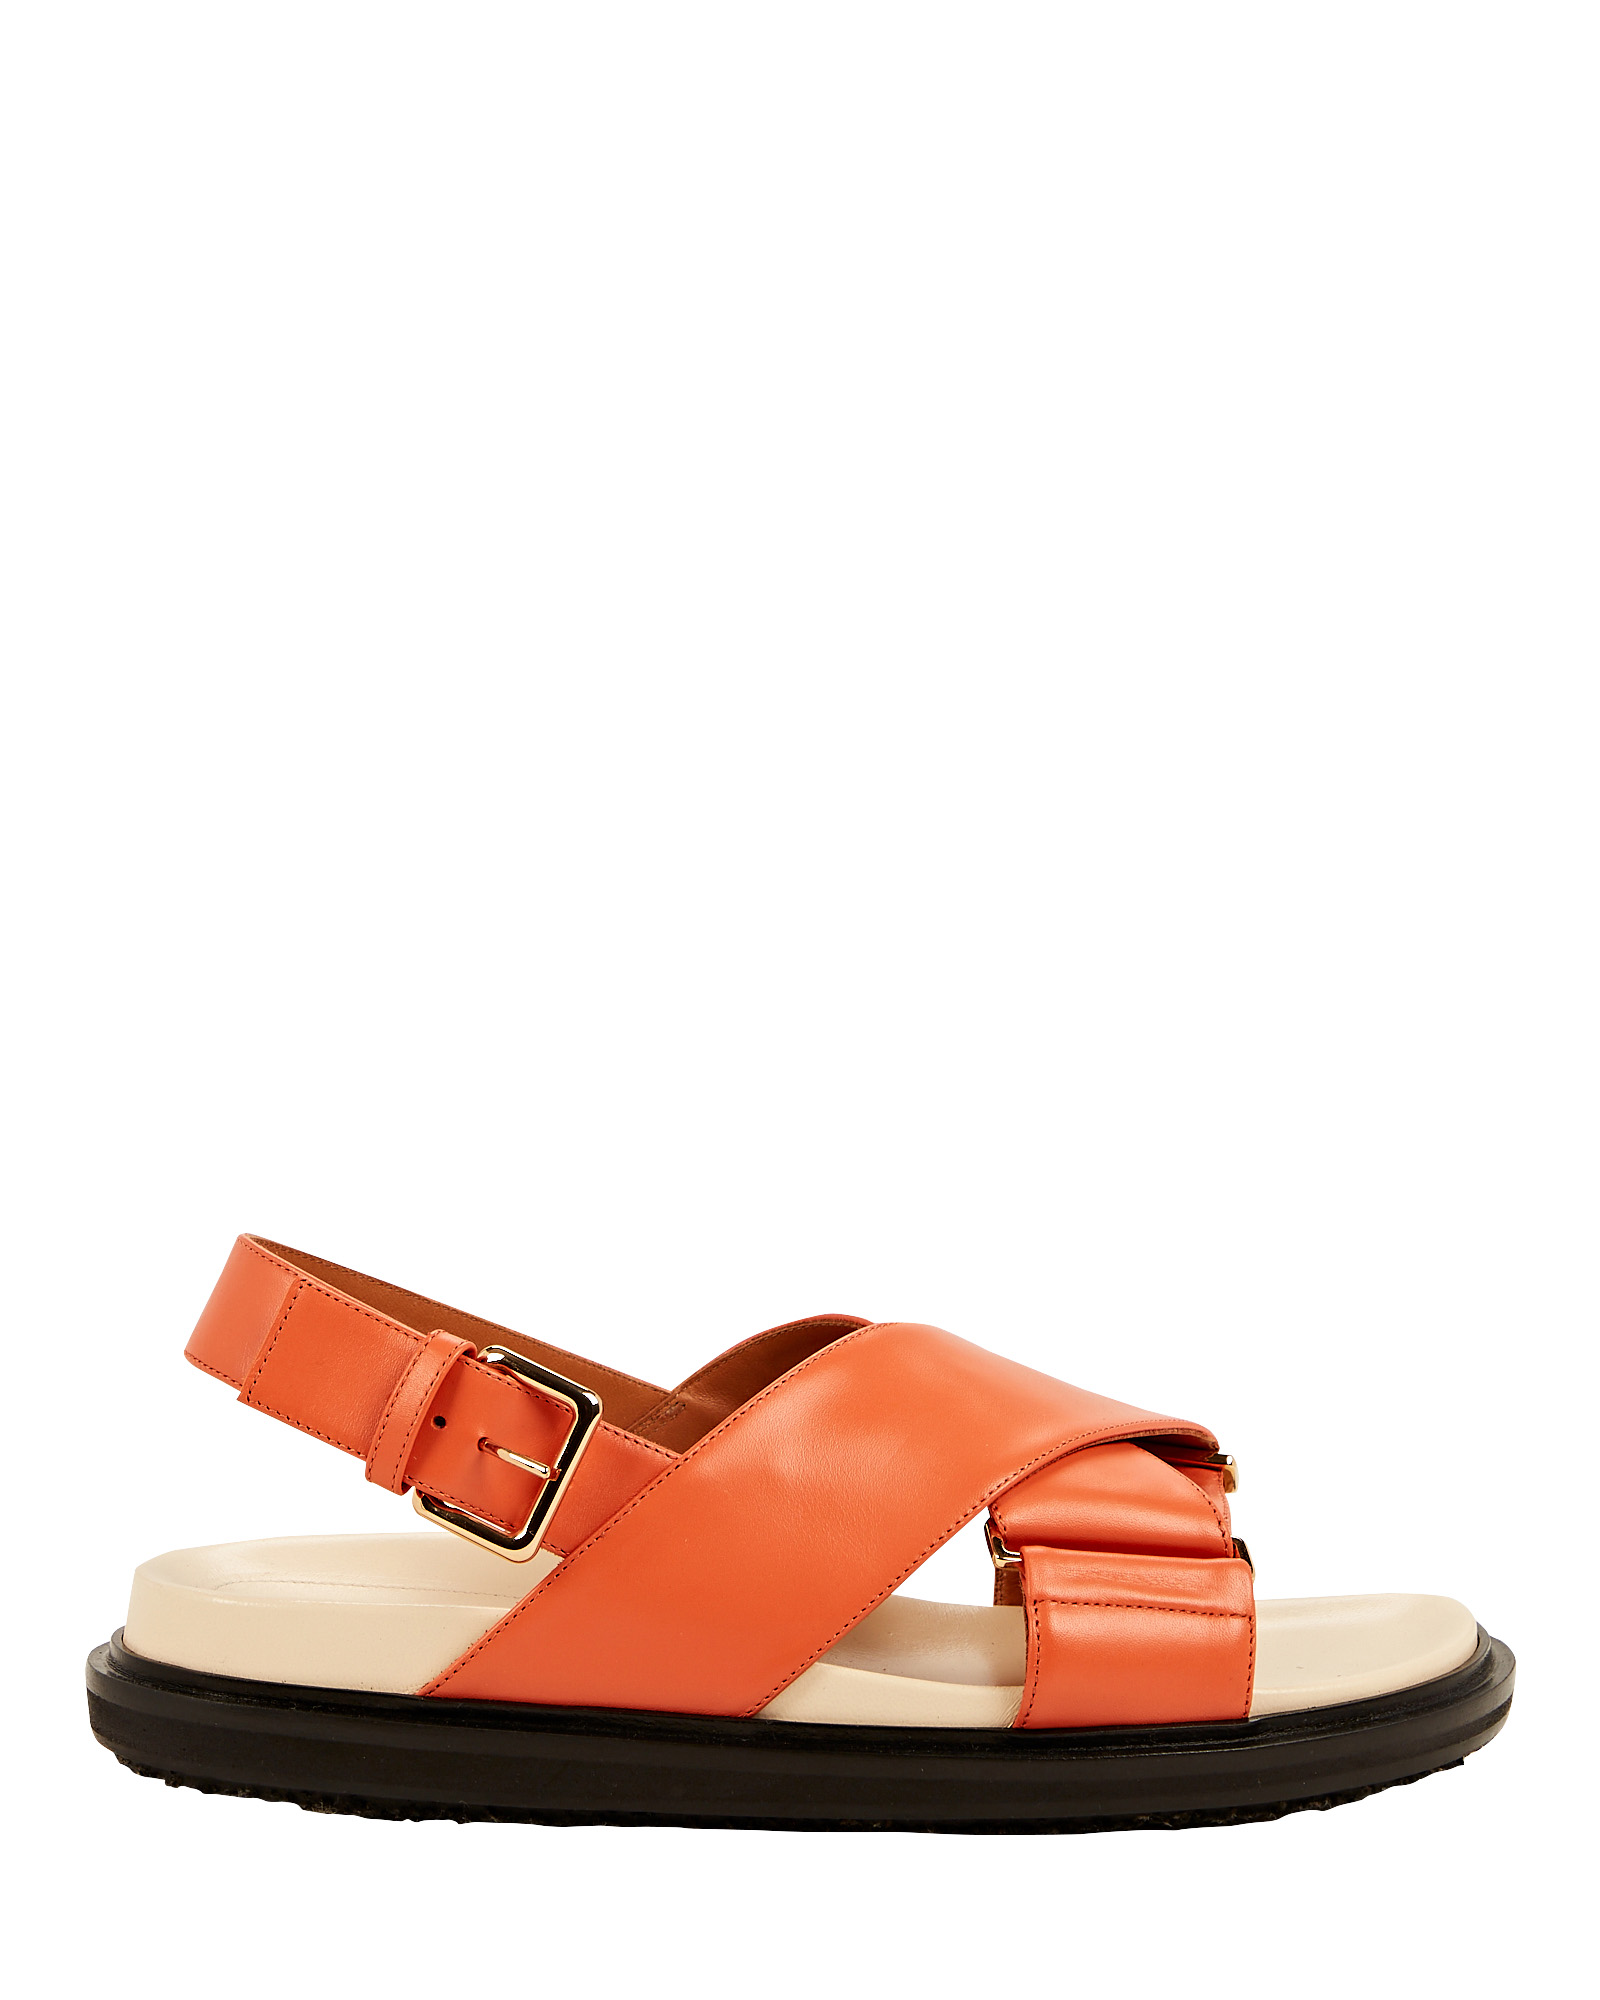 Marni Fussbett Leather Slide Sandals | INTERMIX®